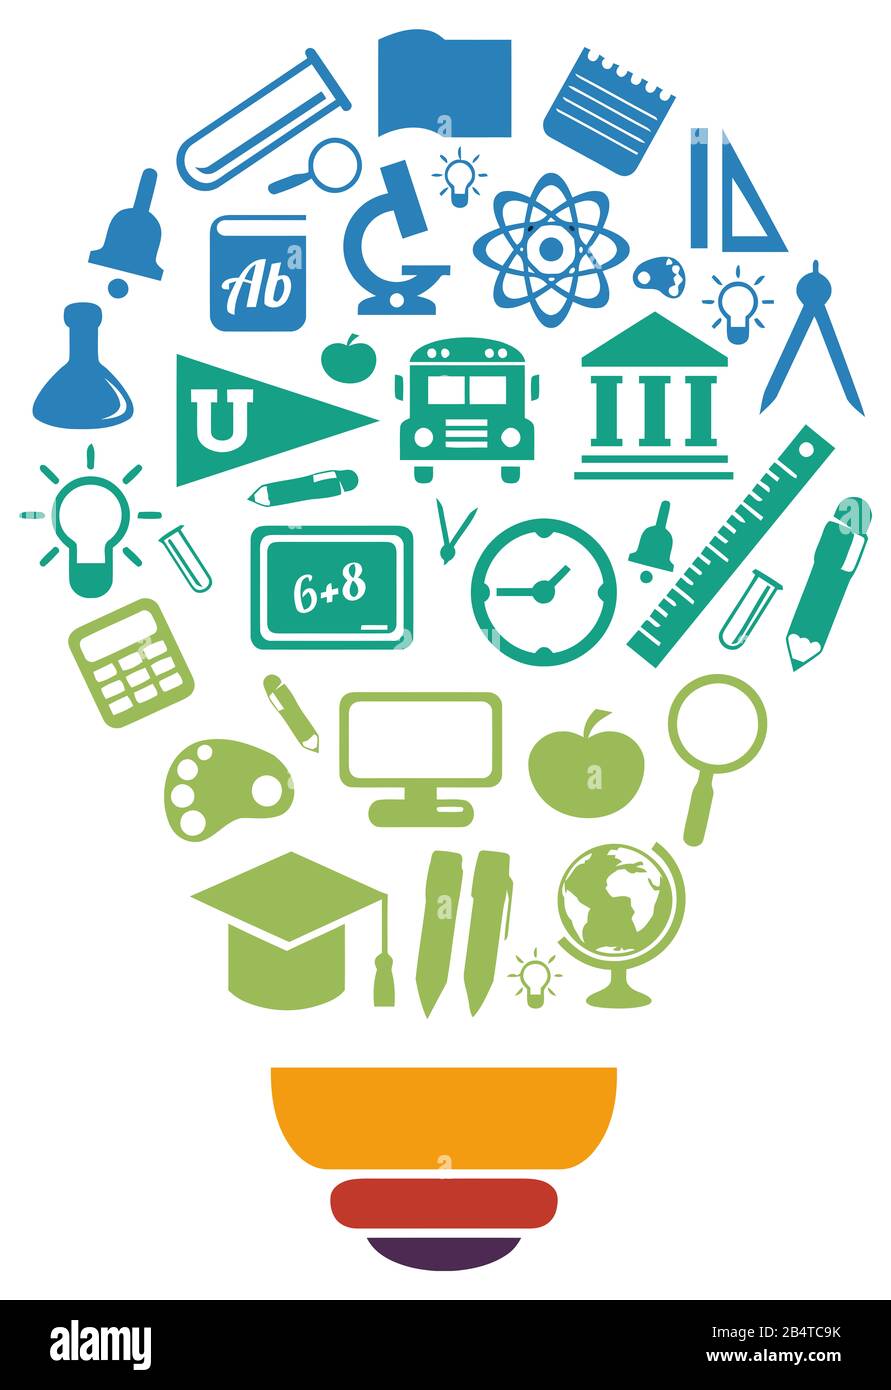 cycle student university ideas innovation inside bulb illustration Stock Photo